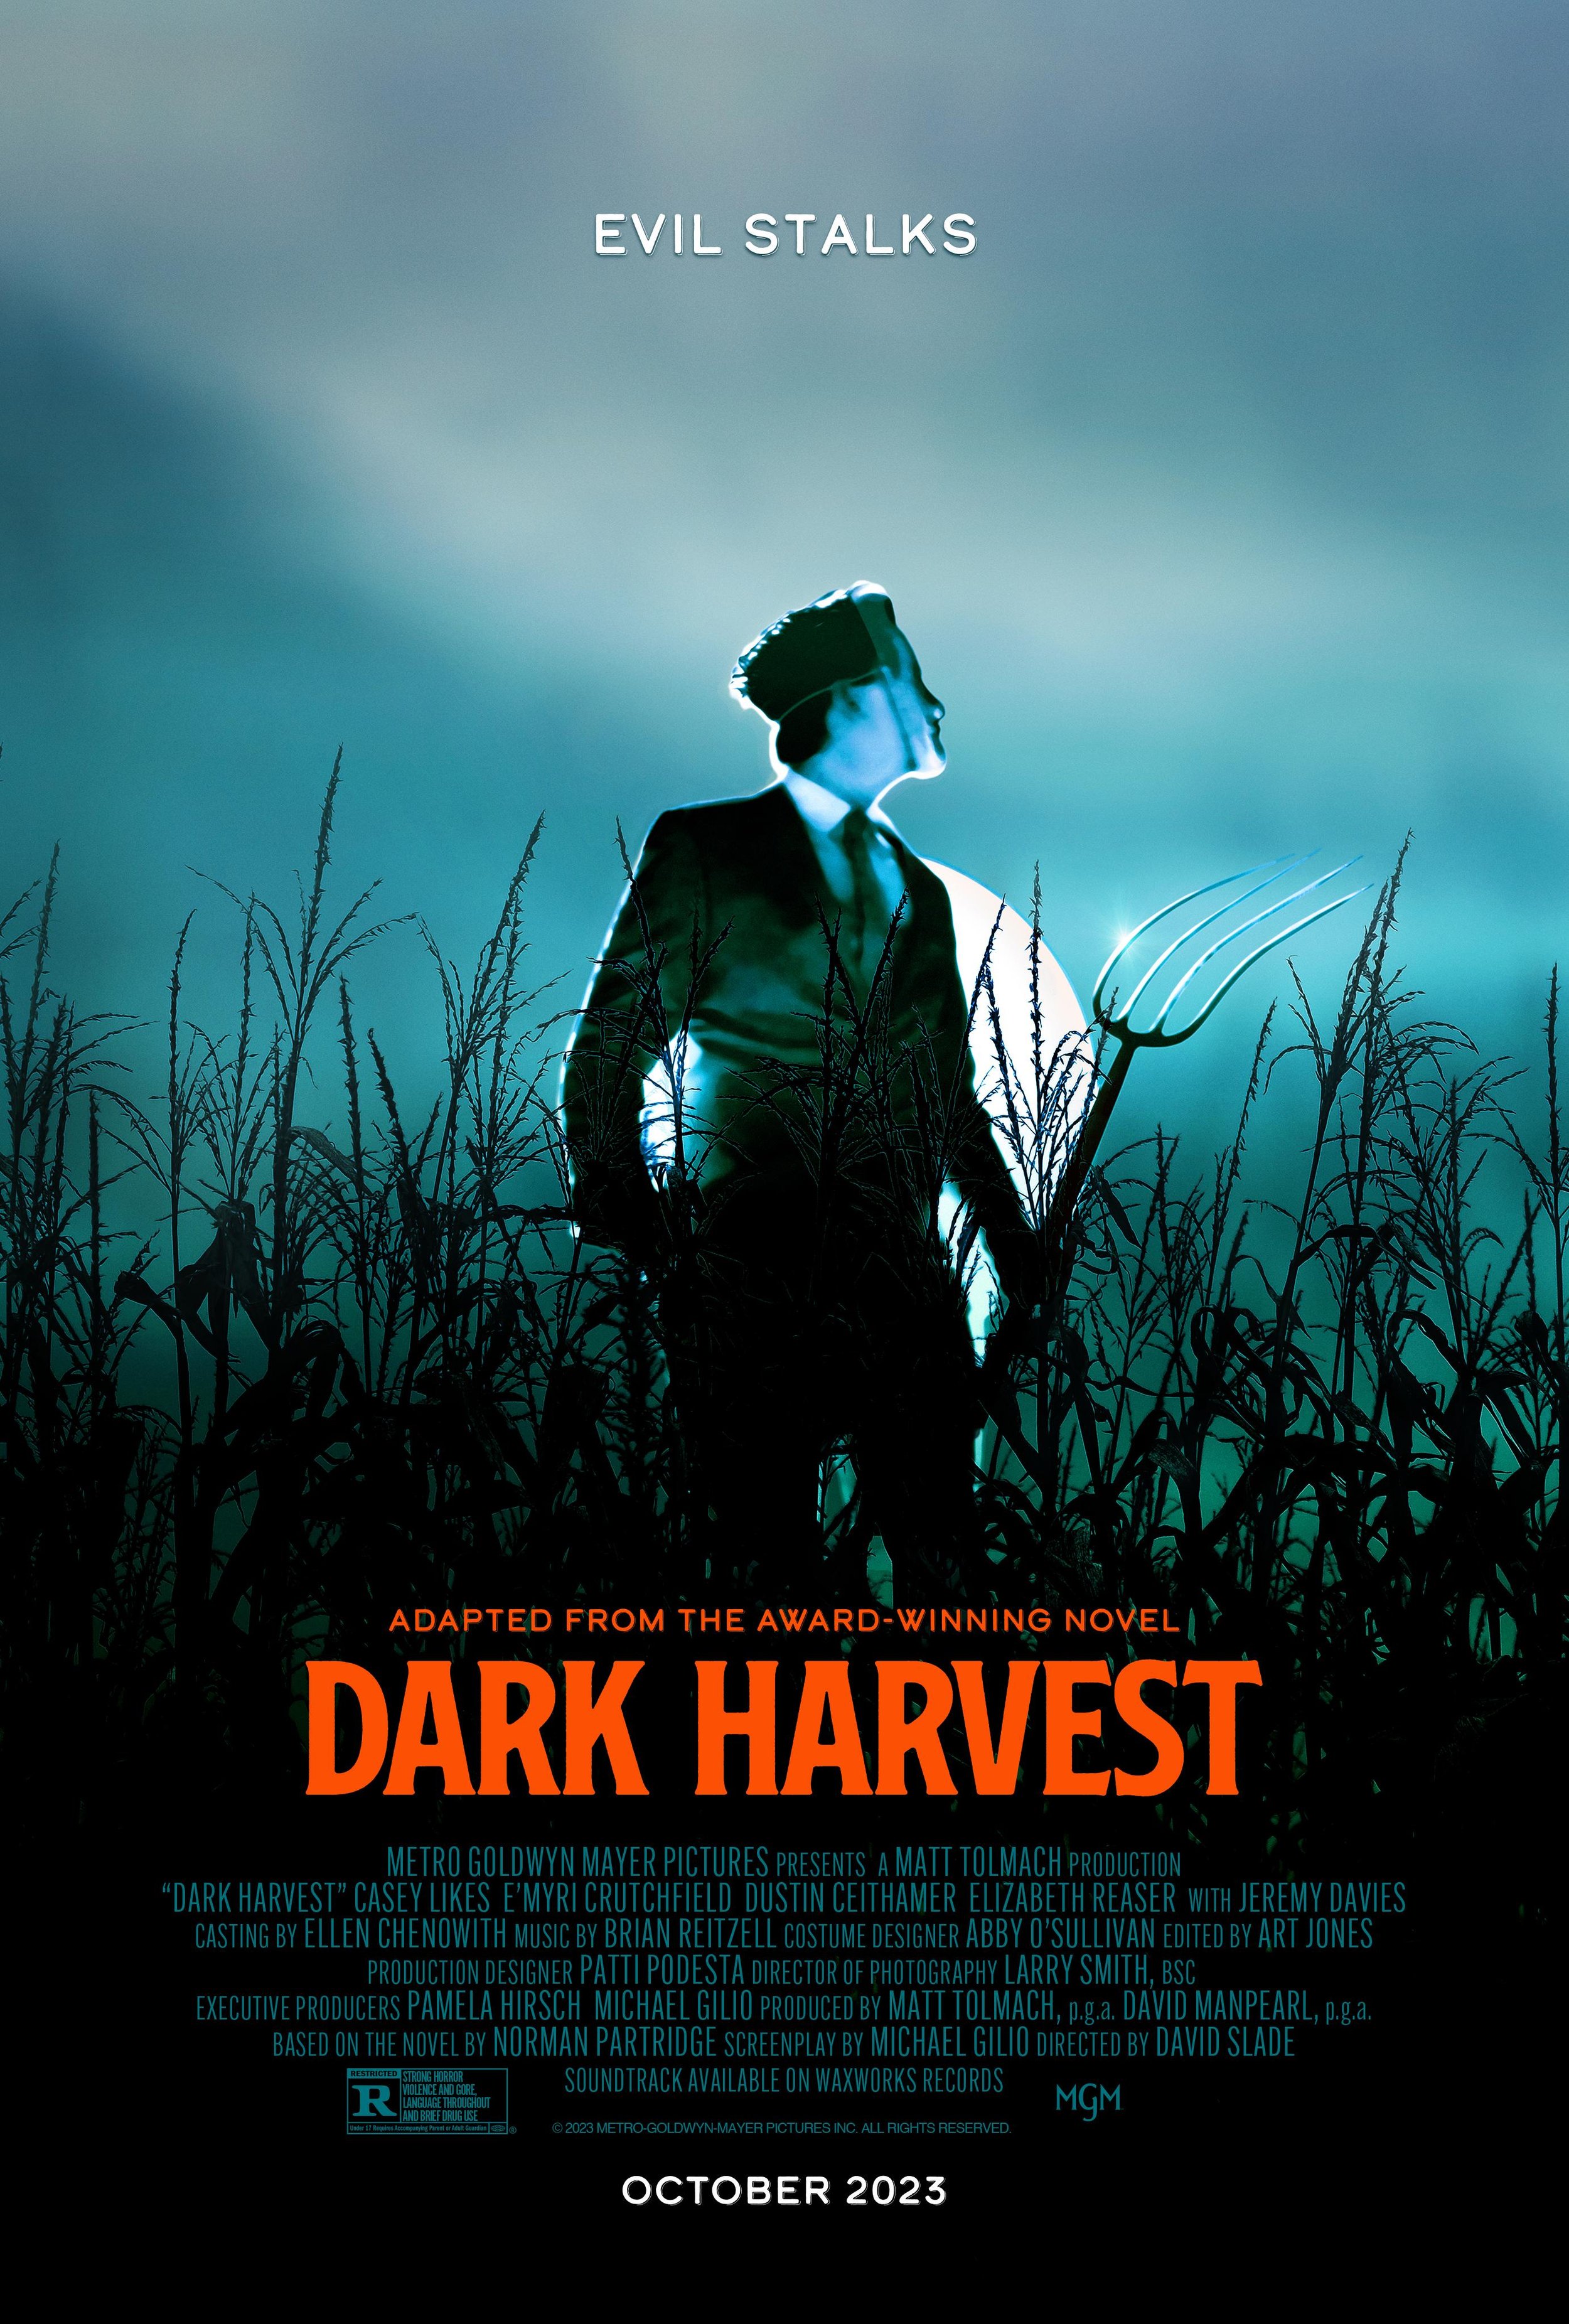 Dark Harvest image © MGM